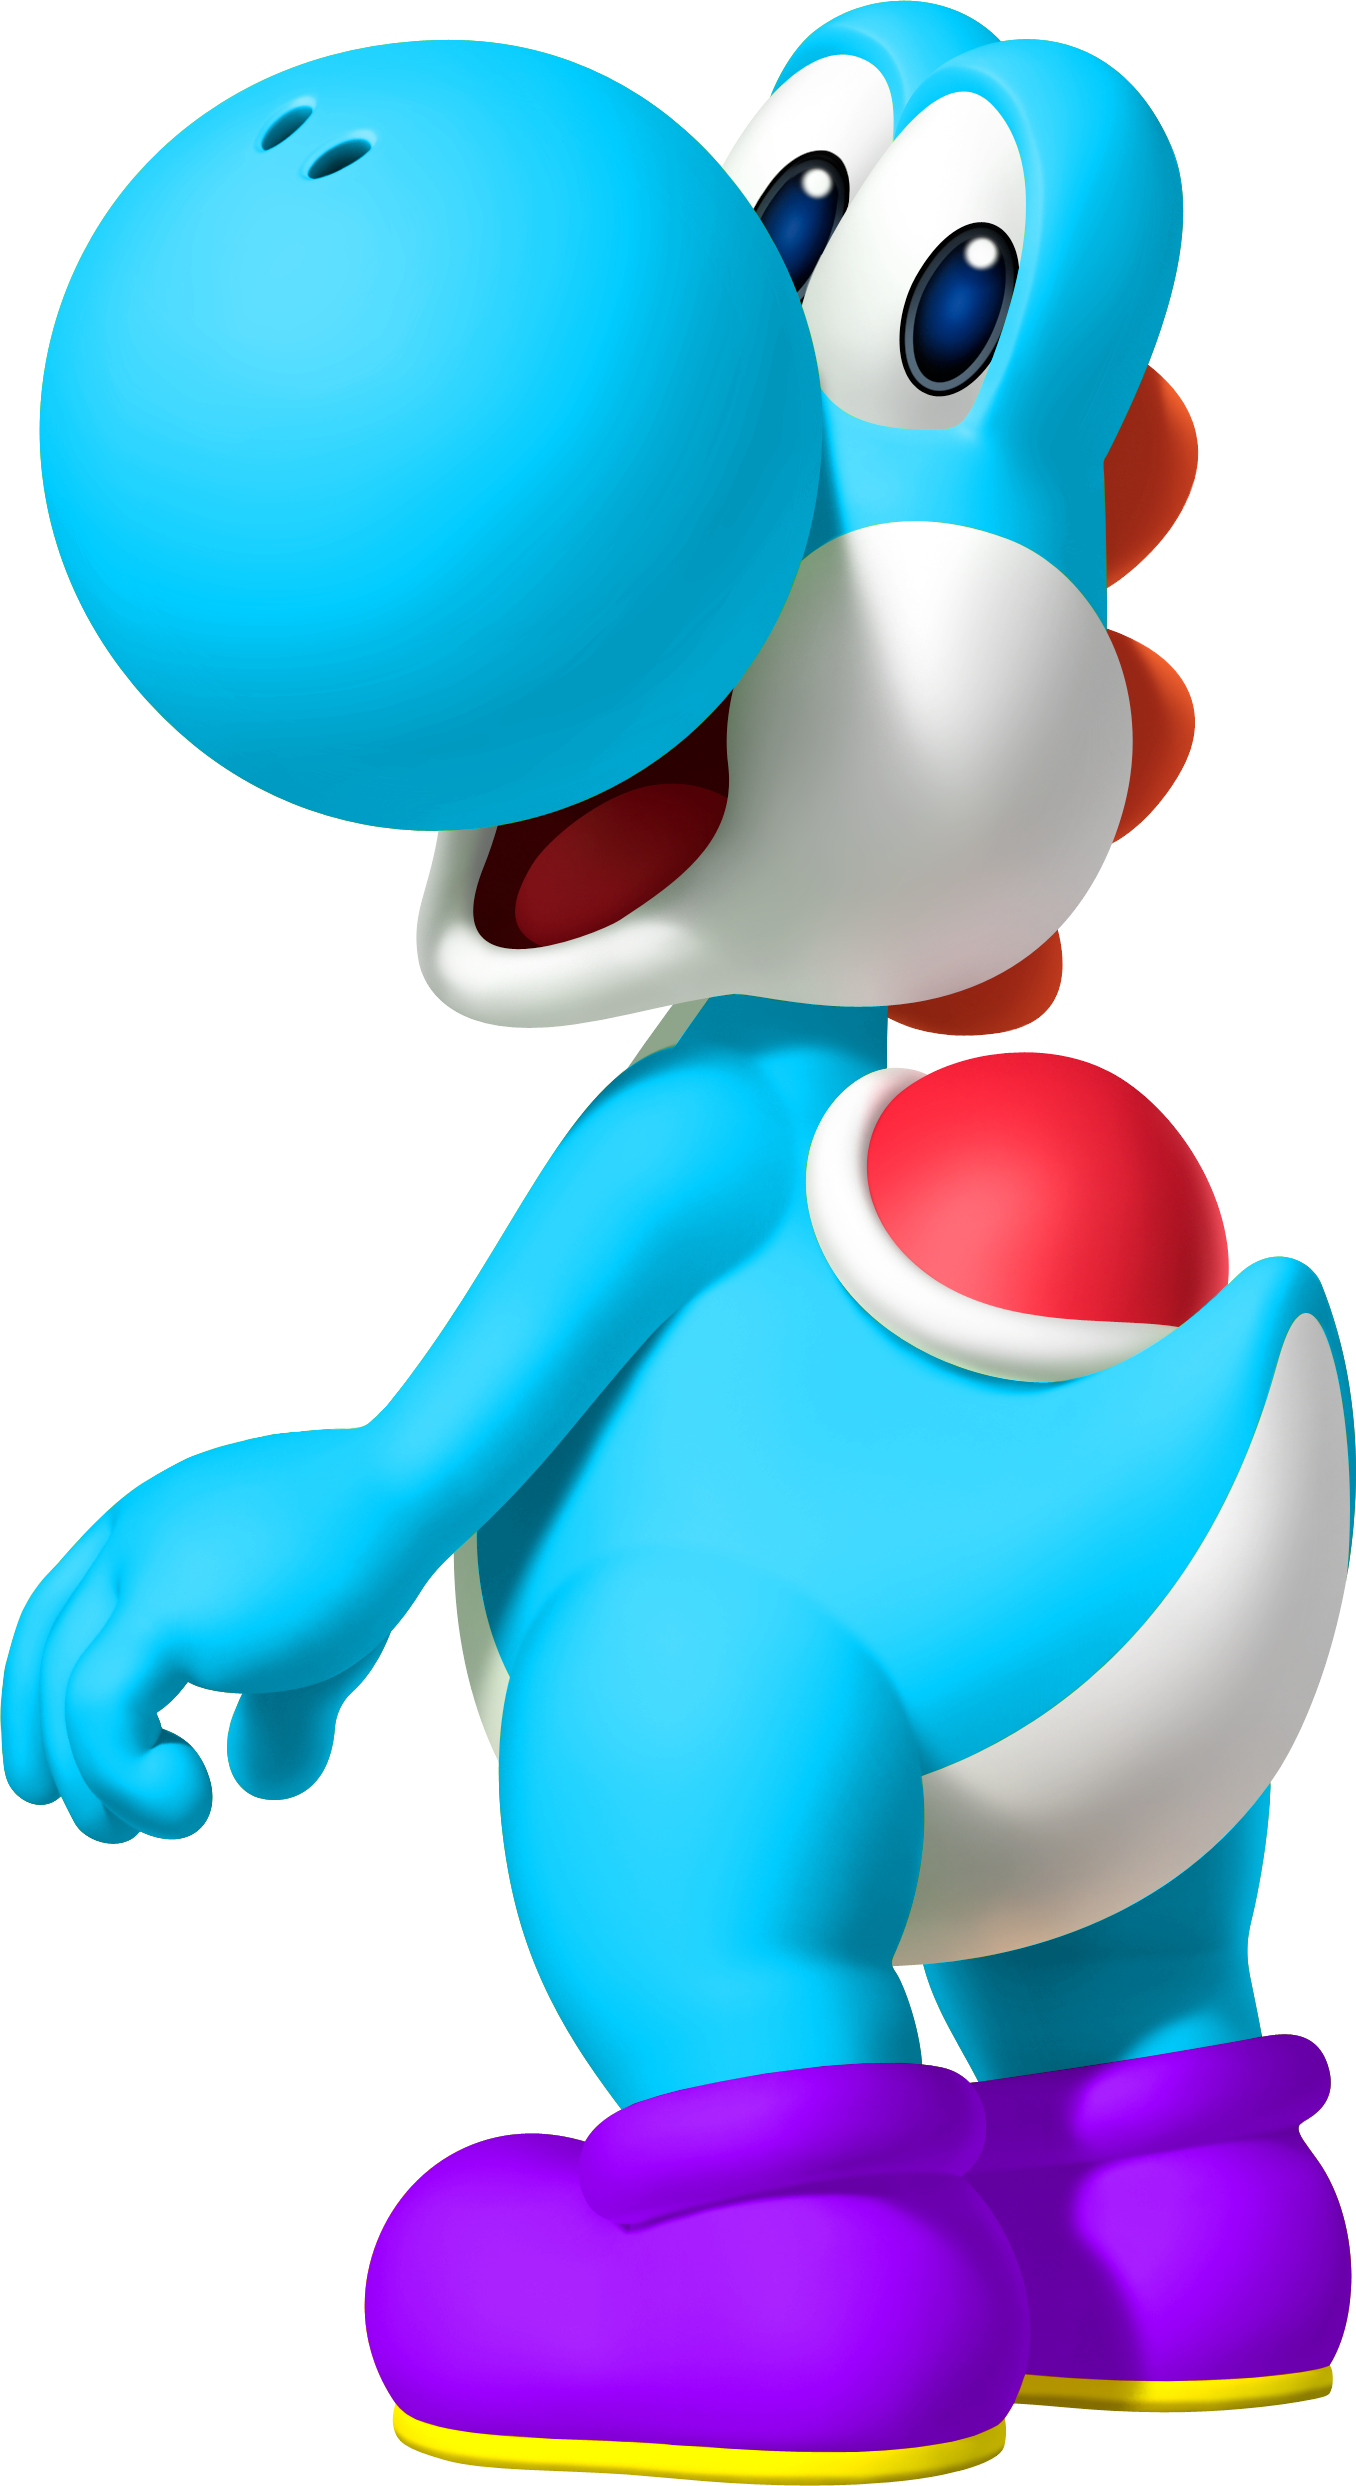 World of Nintendo Light Blue Yoshi with Egg Action Figure, 4